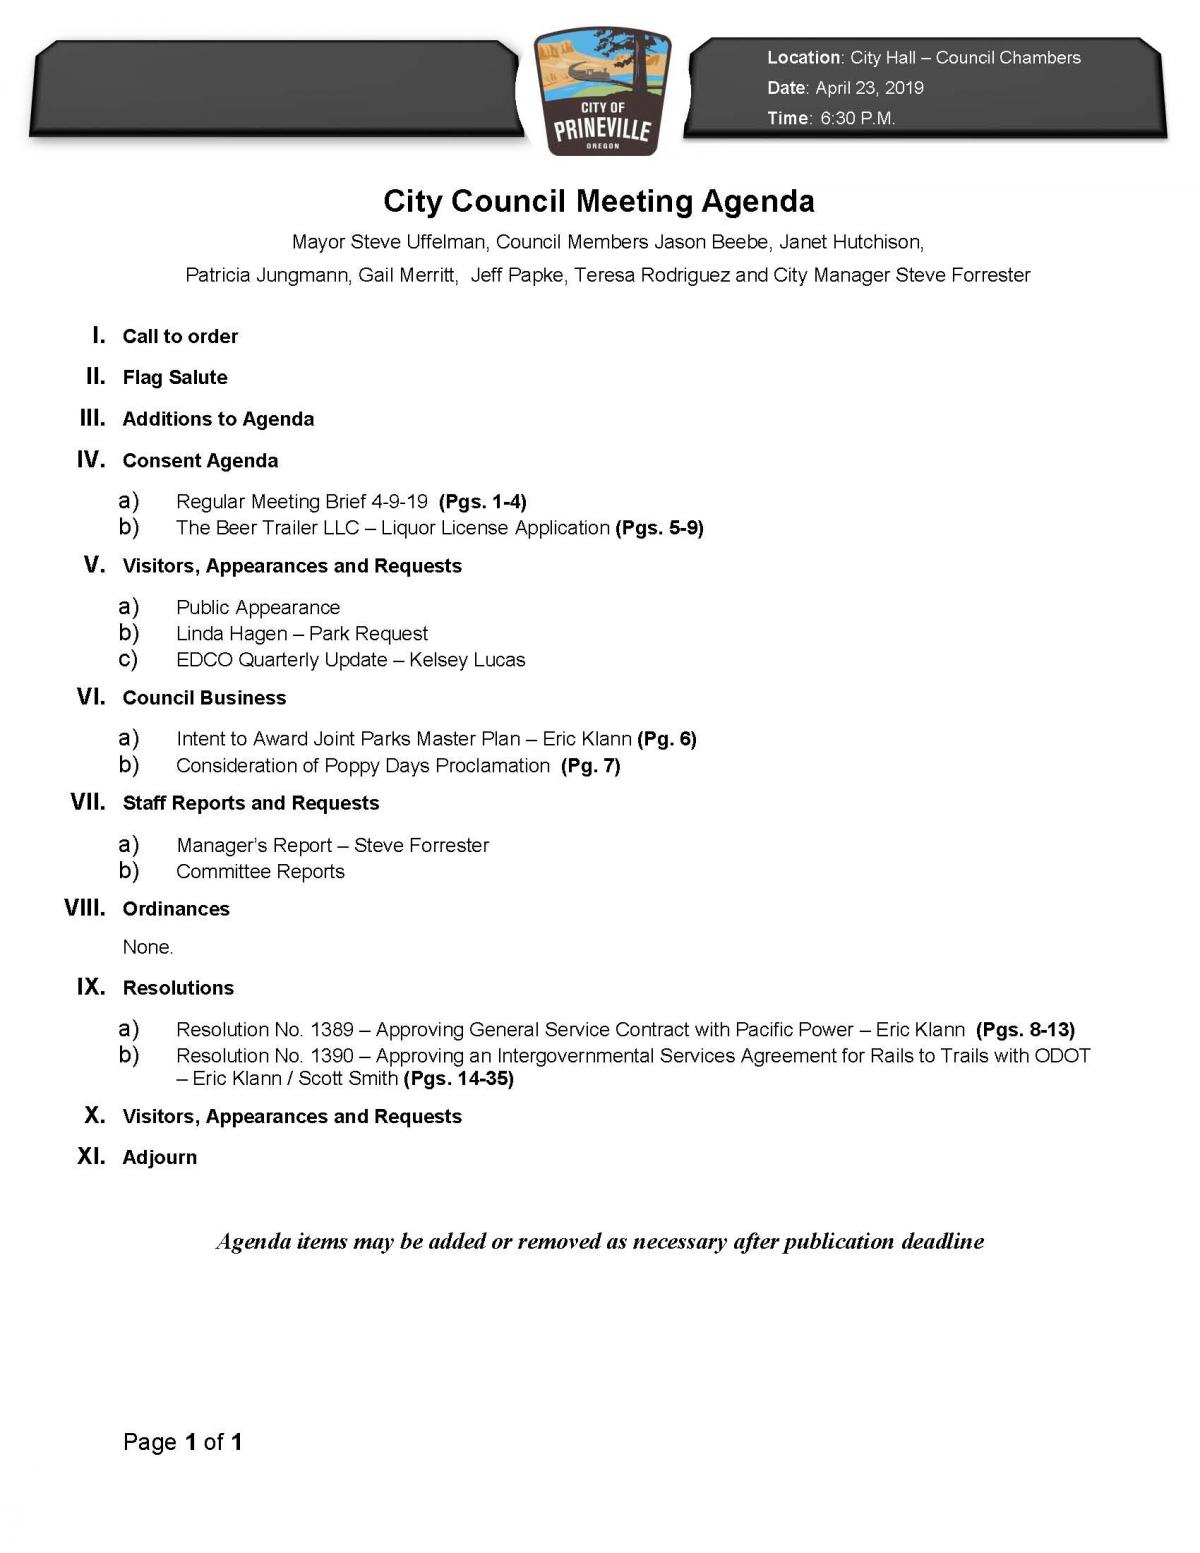 Council Agenda 4-23-19